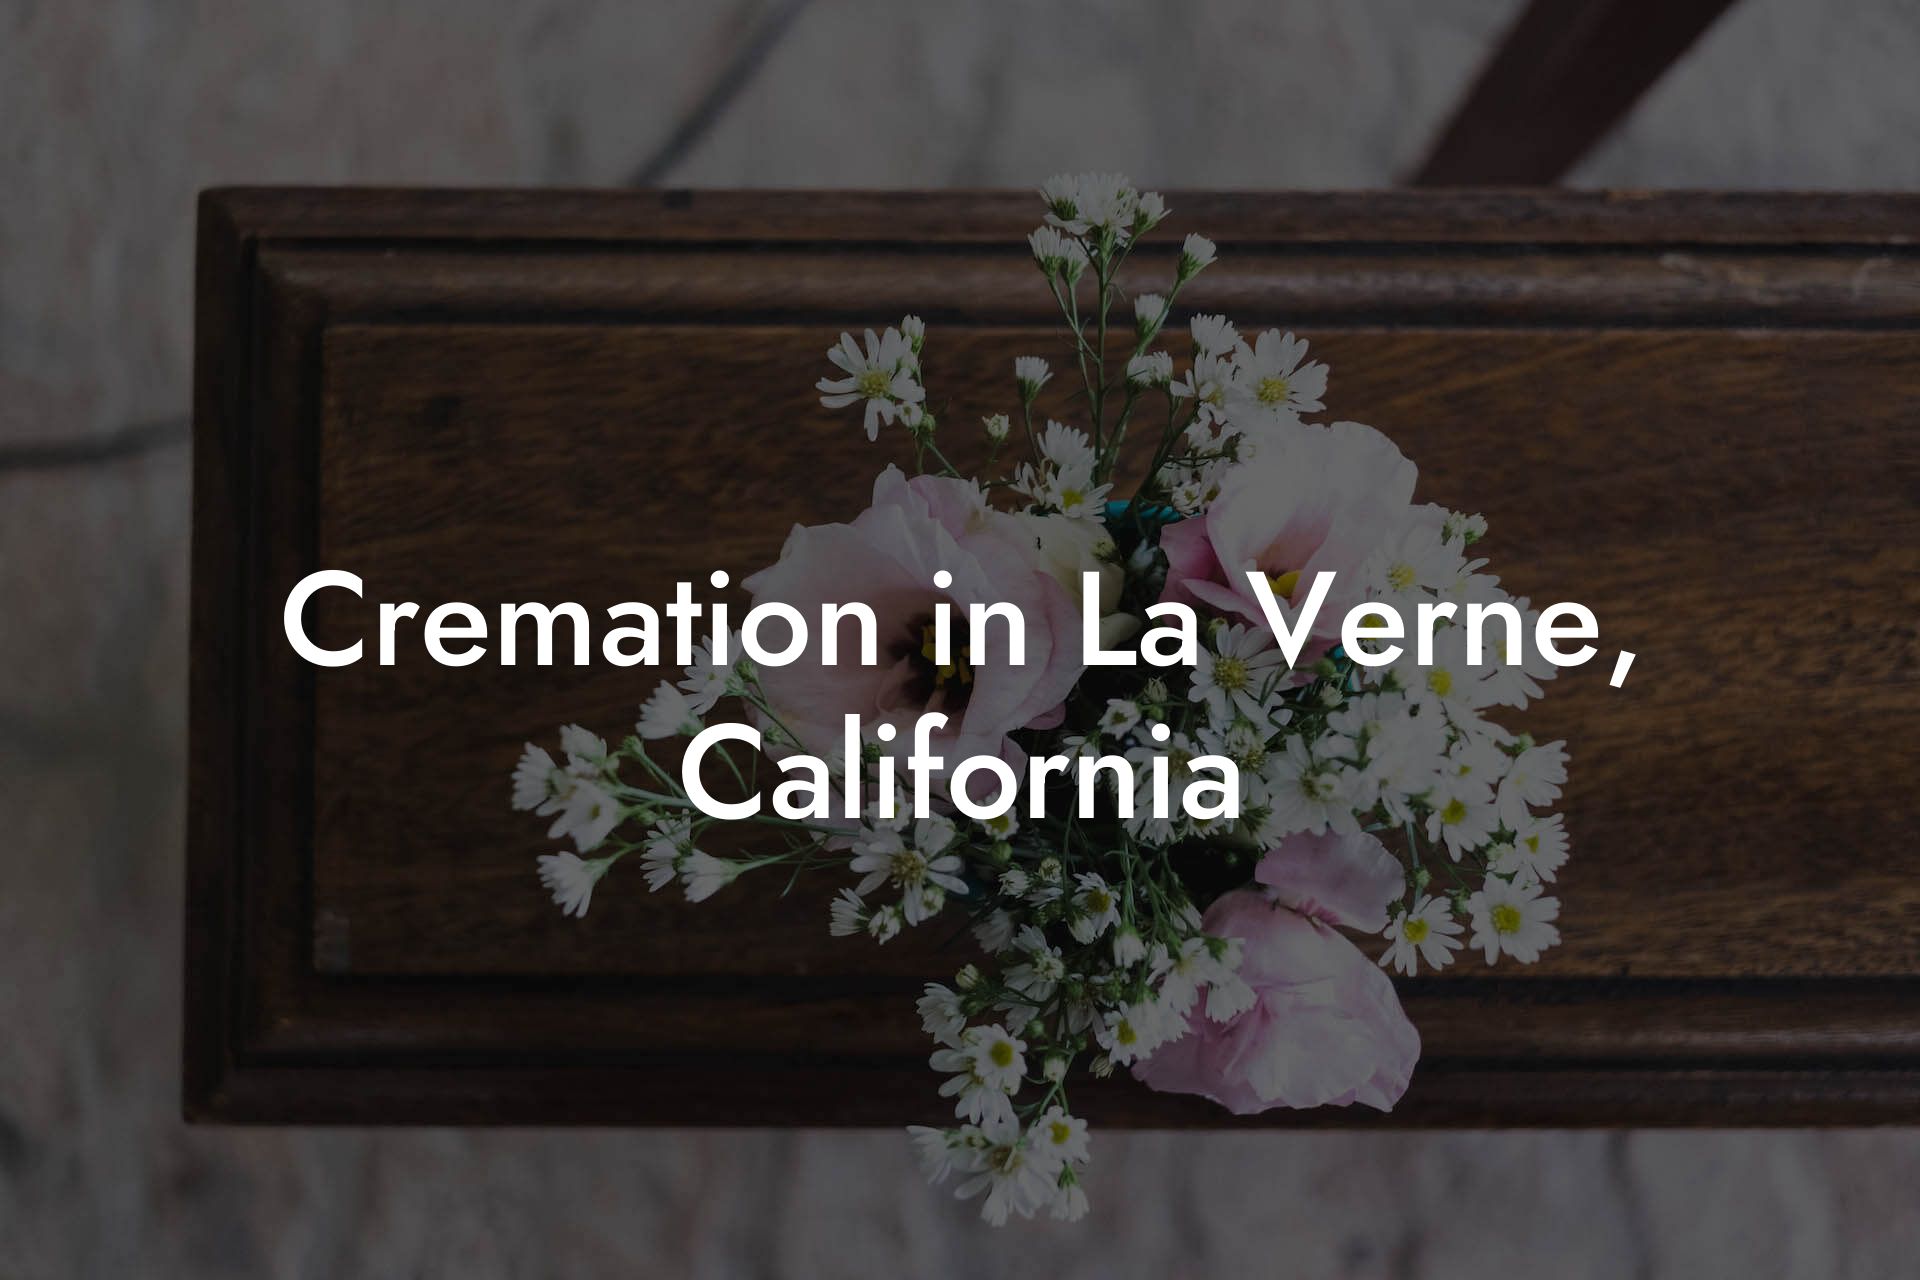 Cremation in La Verne, California